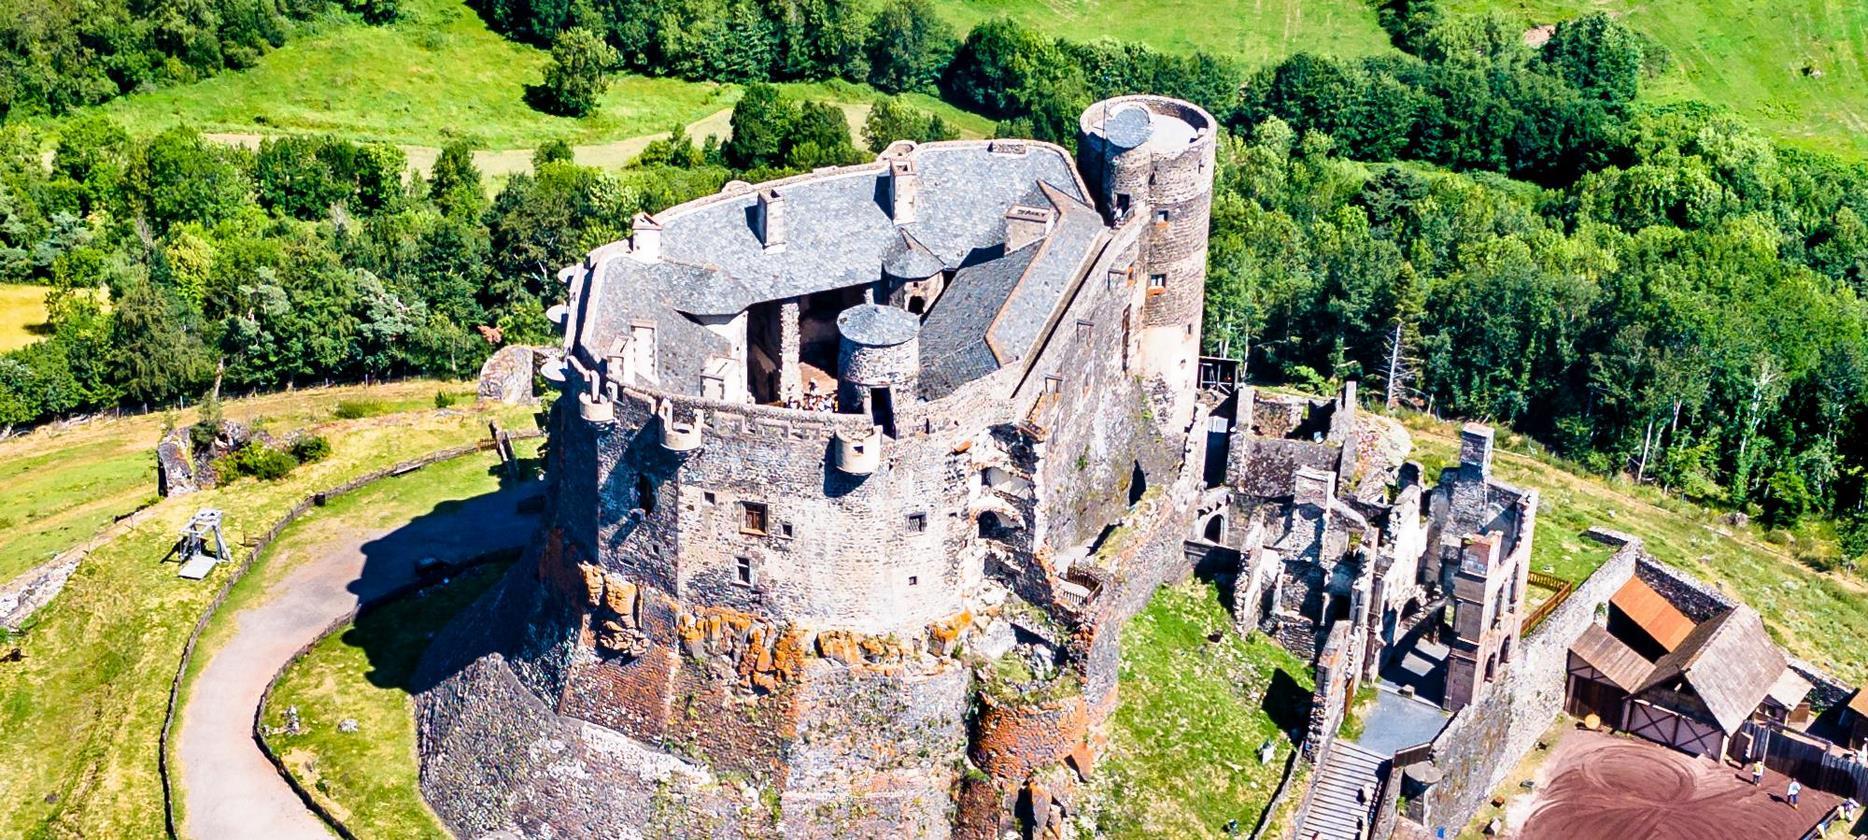 Aerial view of the castle of Murol, fortified castle in Murol